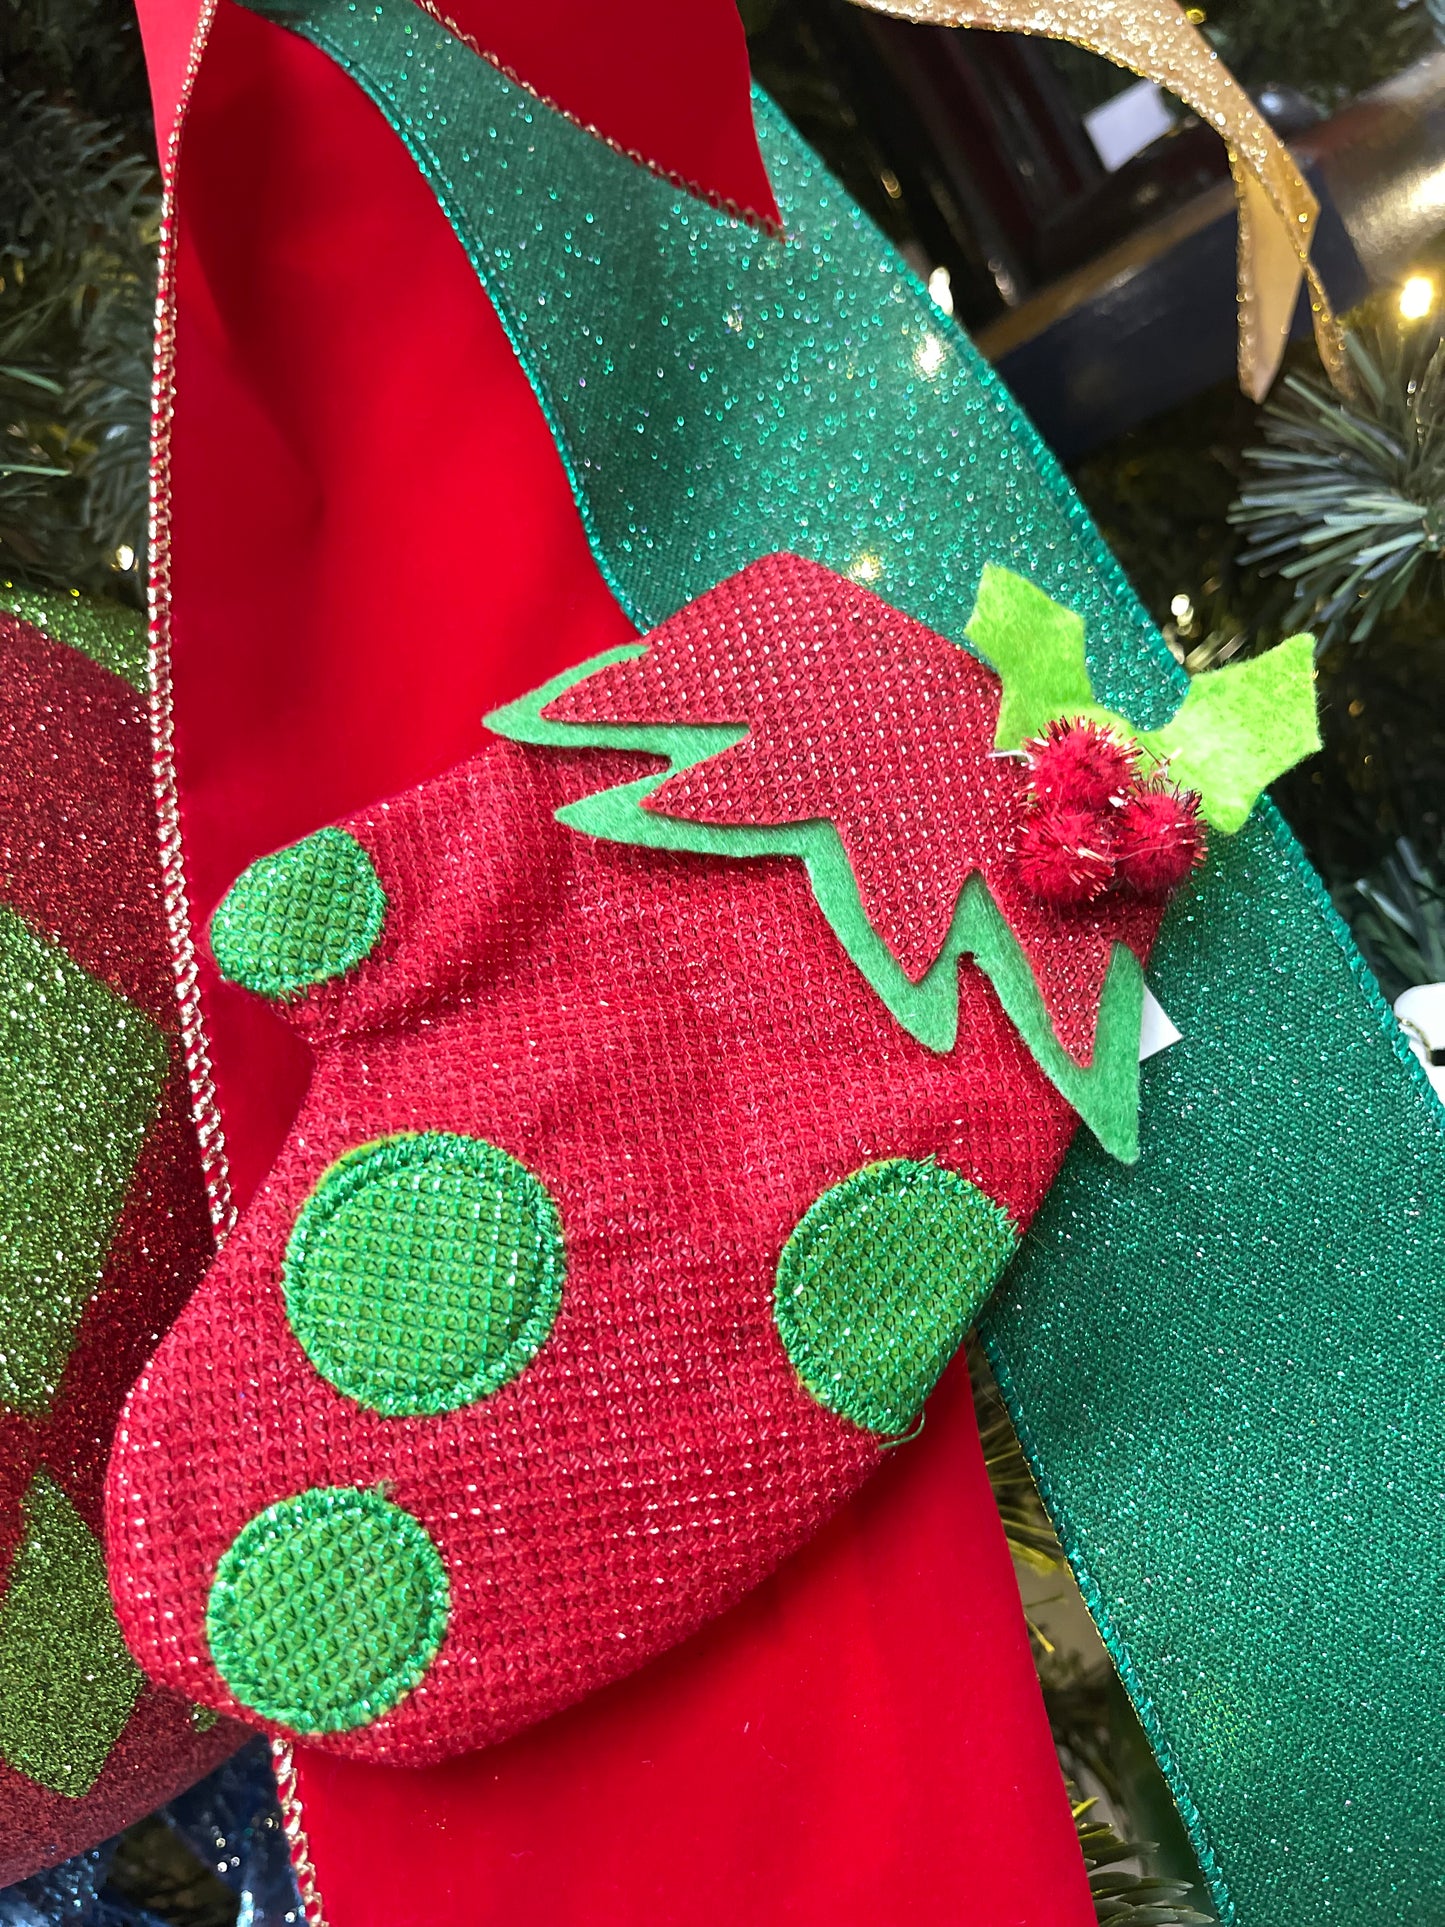 5.5 Inch Plush Fabric Mitten Stocking Ornament 4 Styles